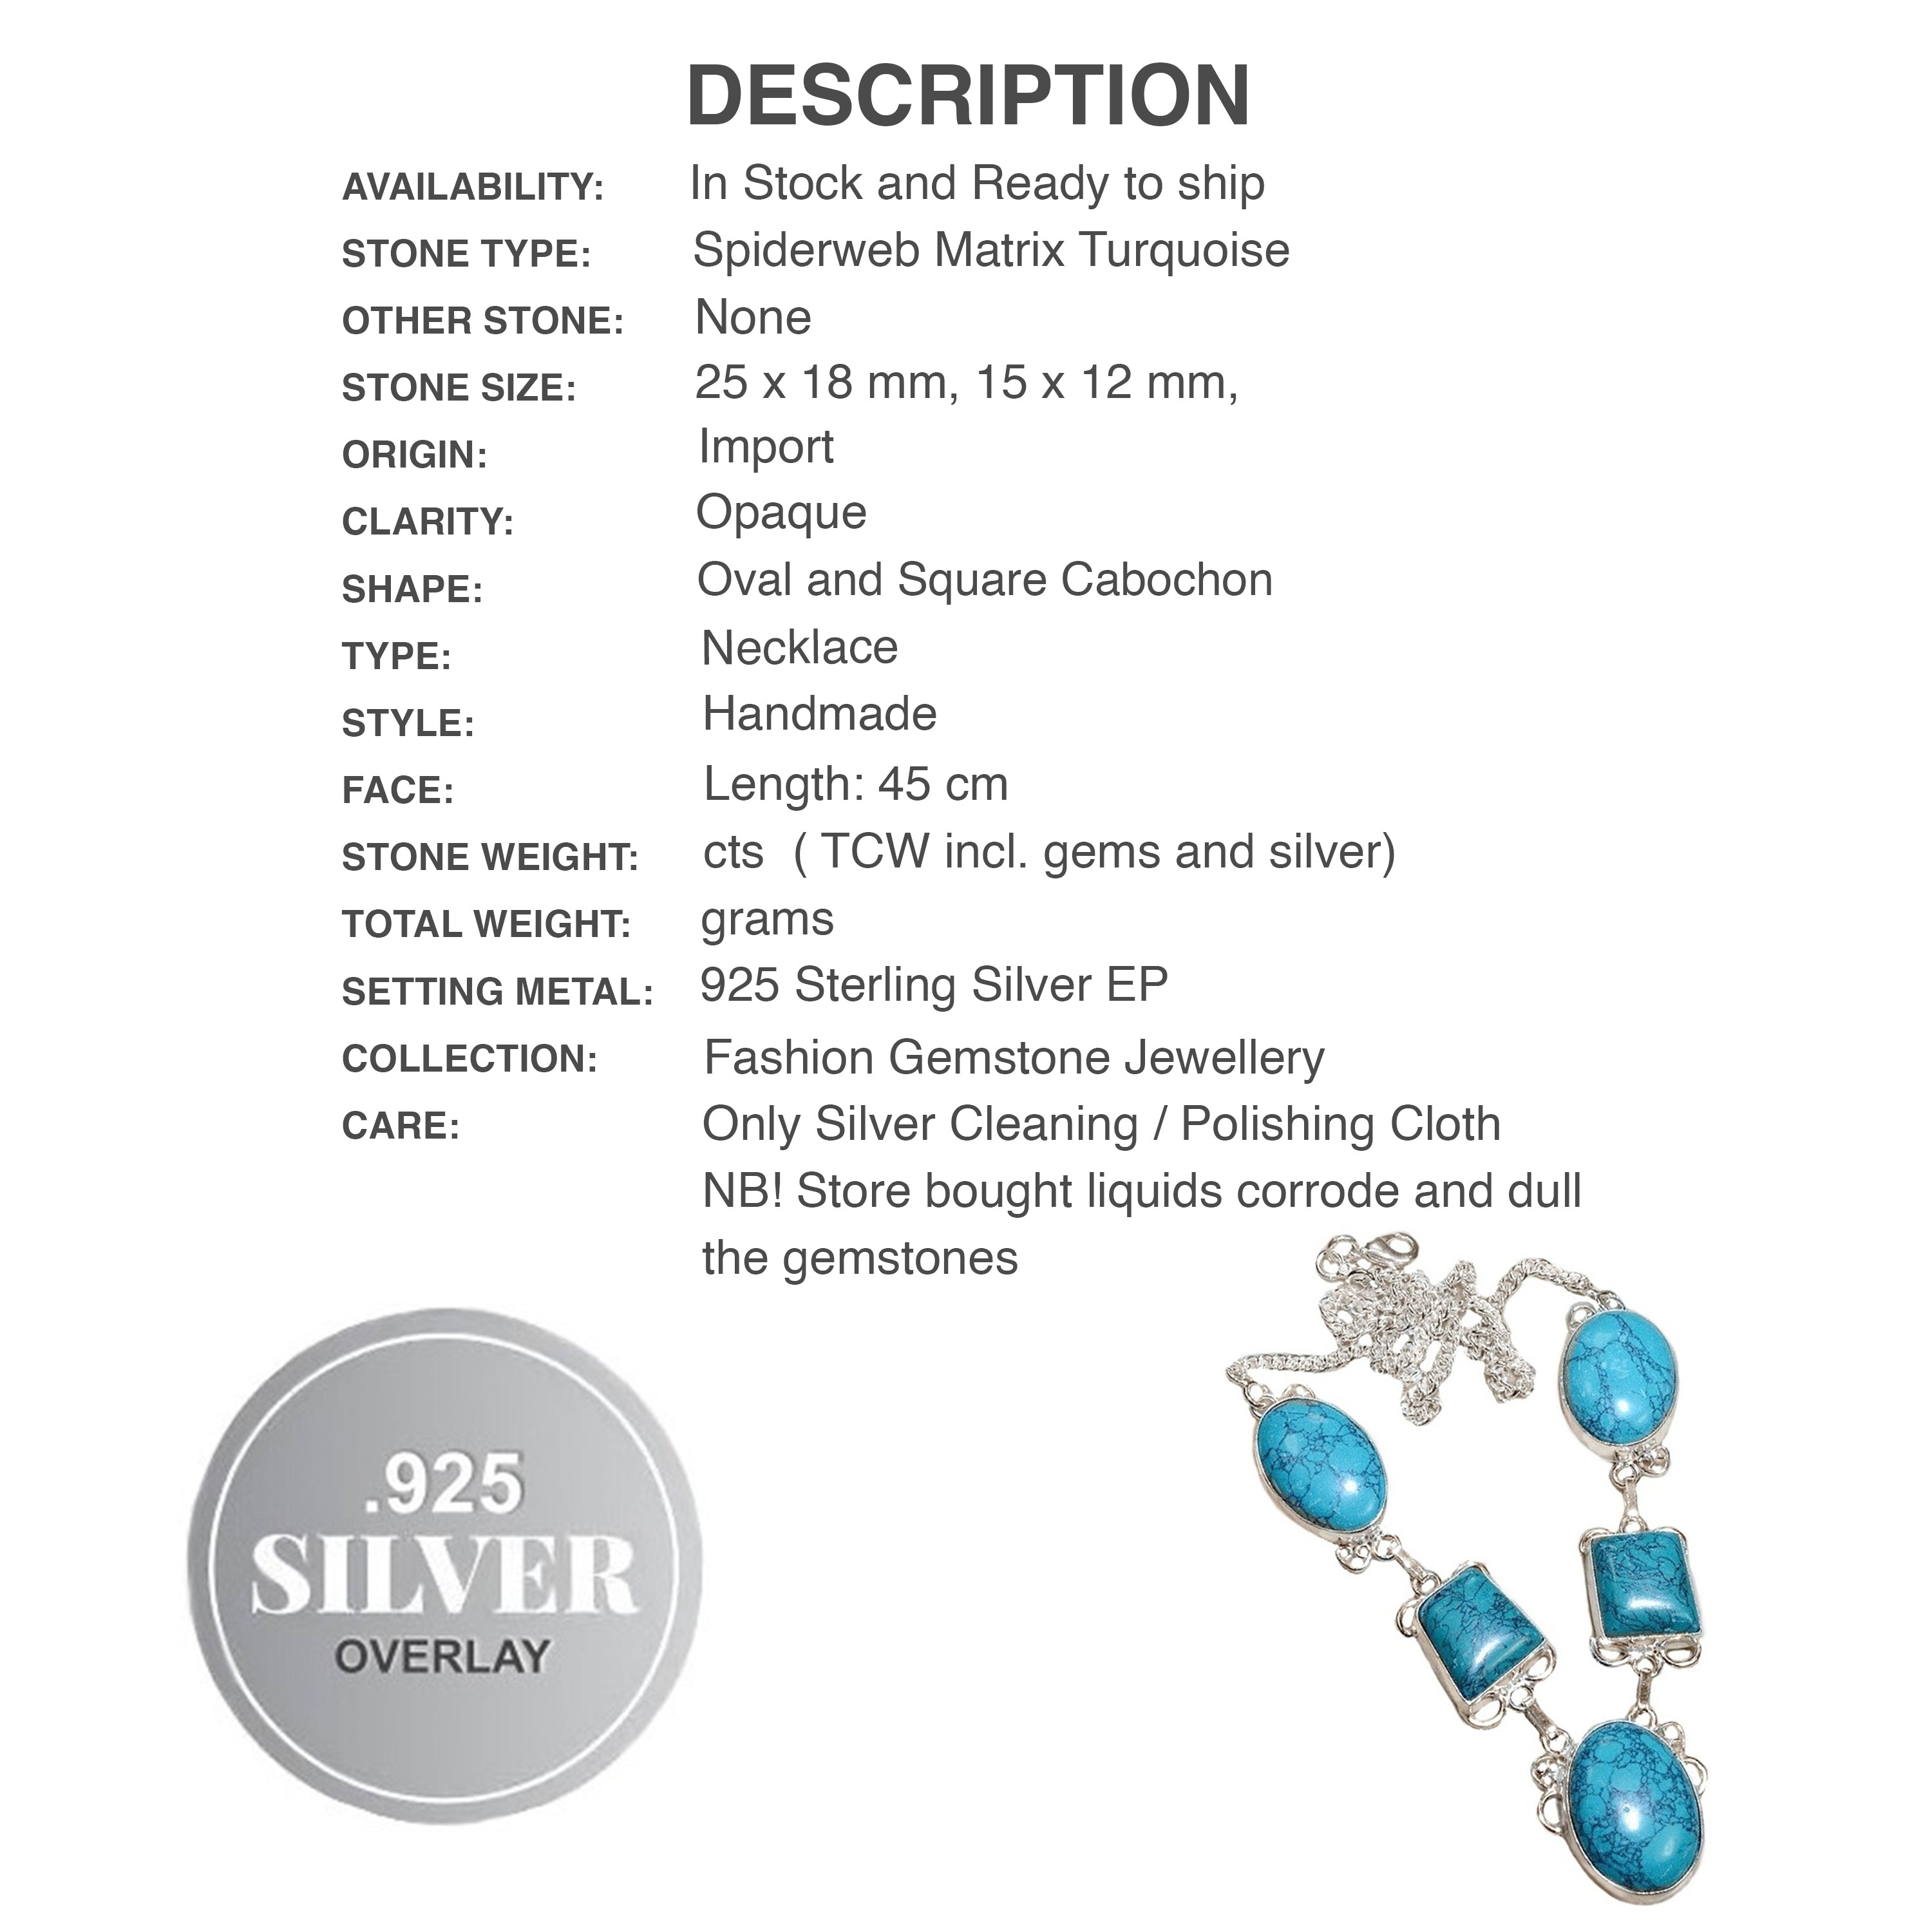 Spiderweb Matrix Turquoise Gemstone .925 Silver Fashion Necklace